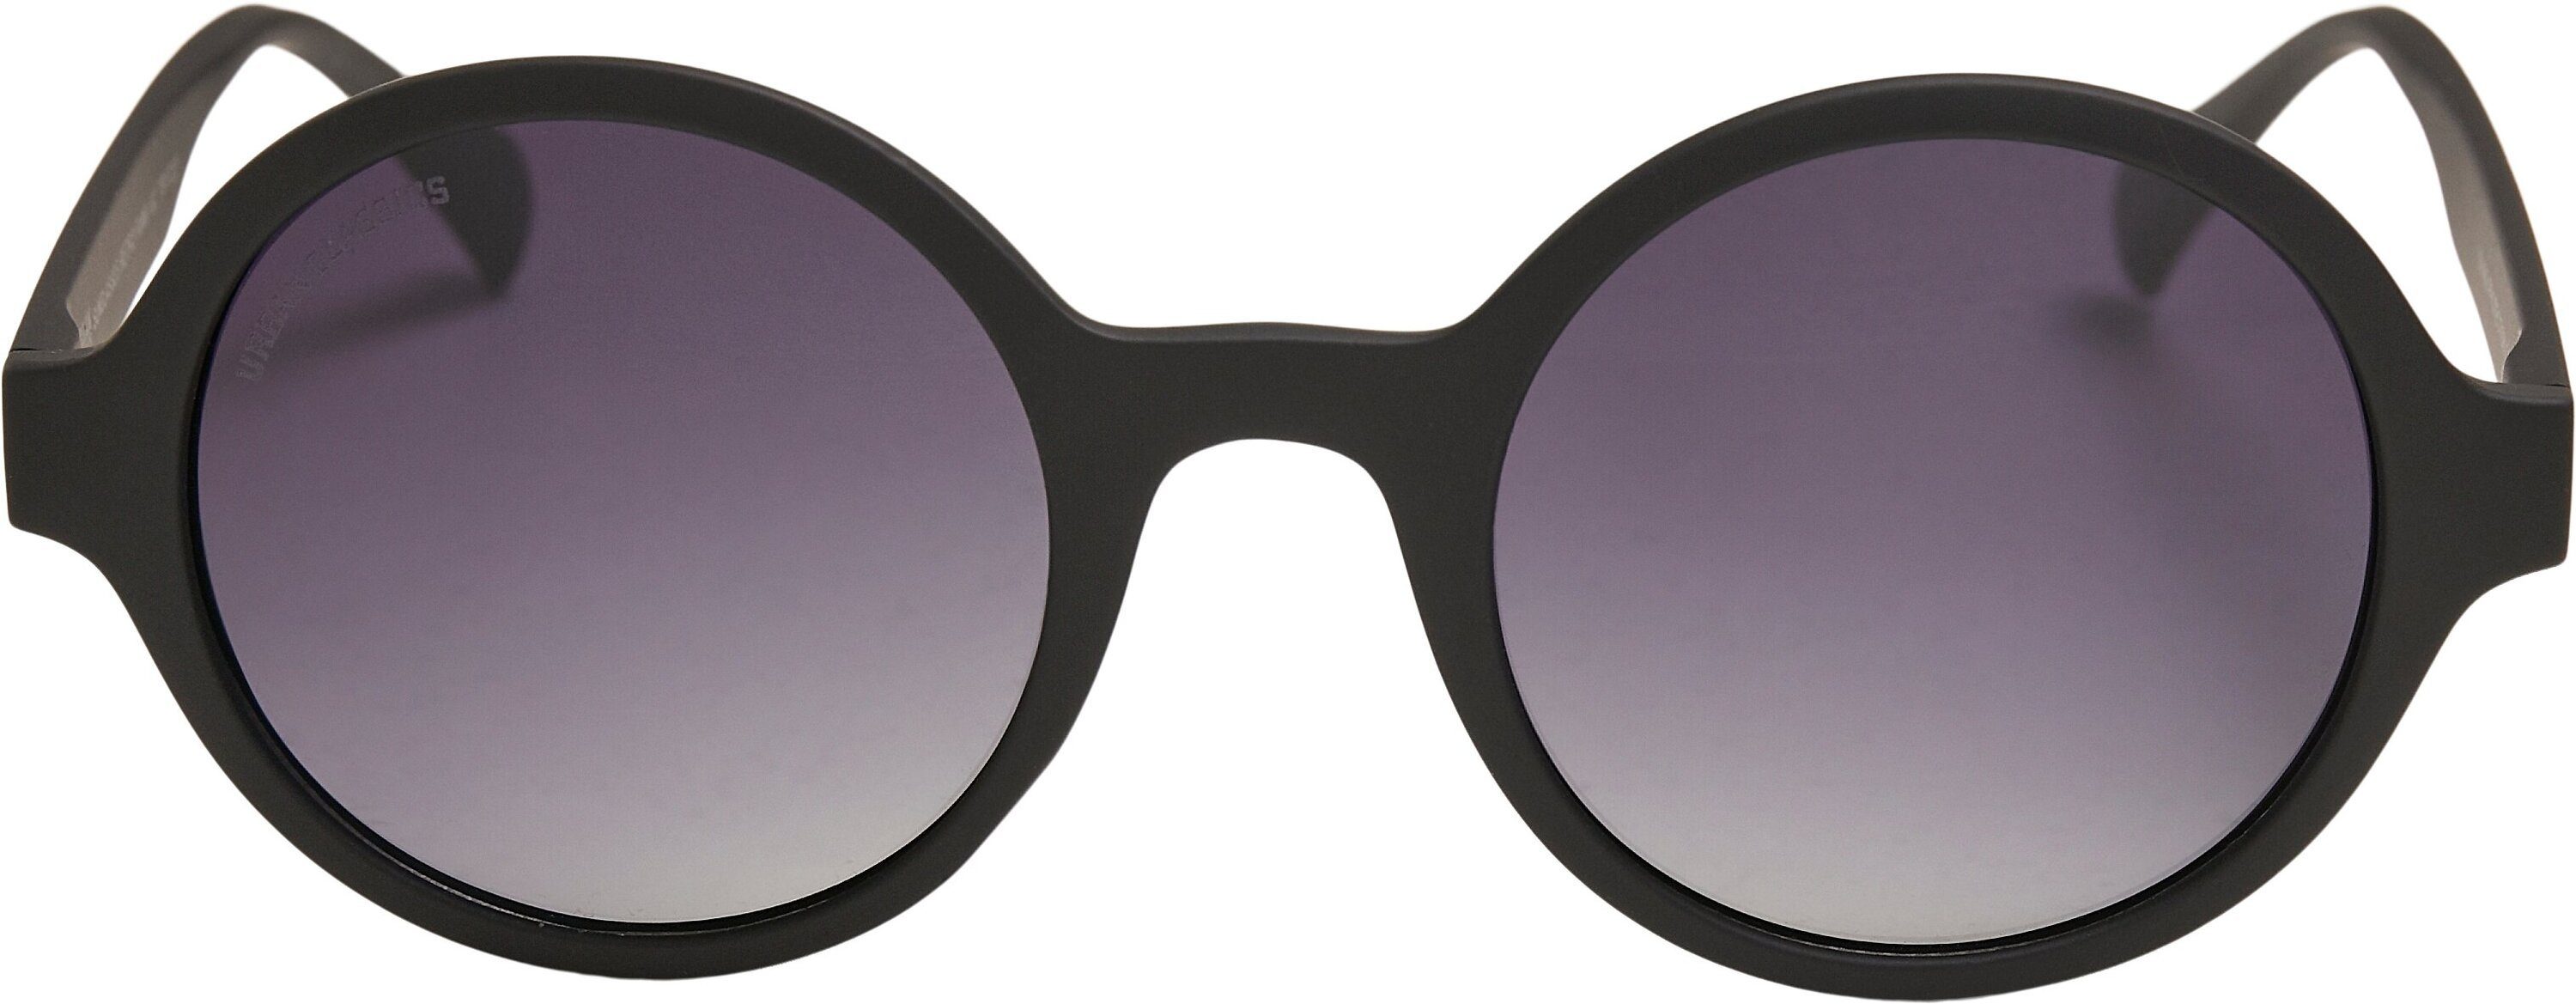 URBAN CLASSICS Sonnenbrille Accessoires Sunglasses black/grey UC Funk Retro